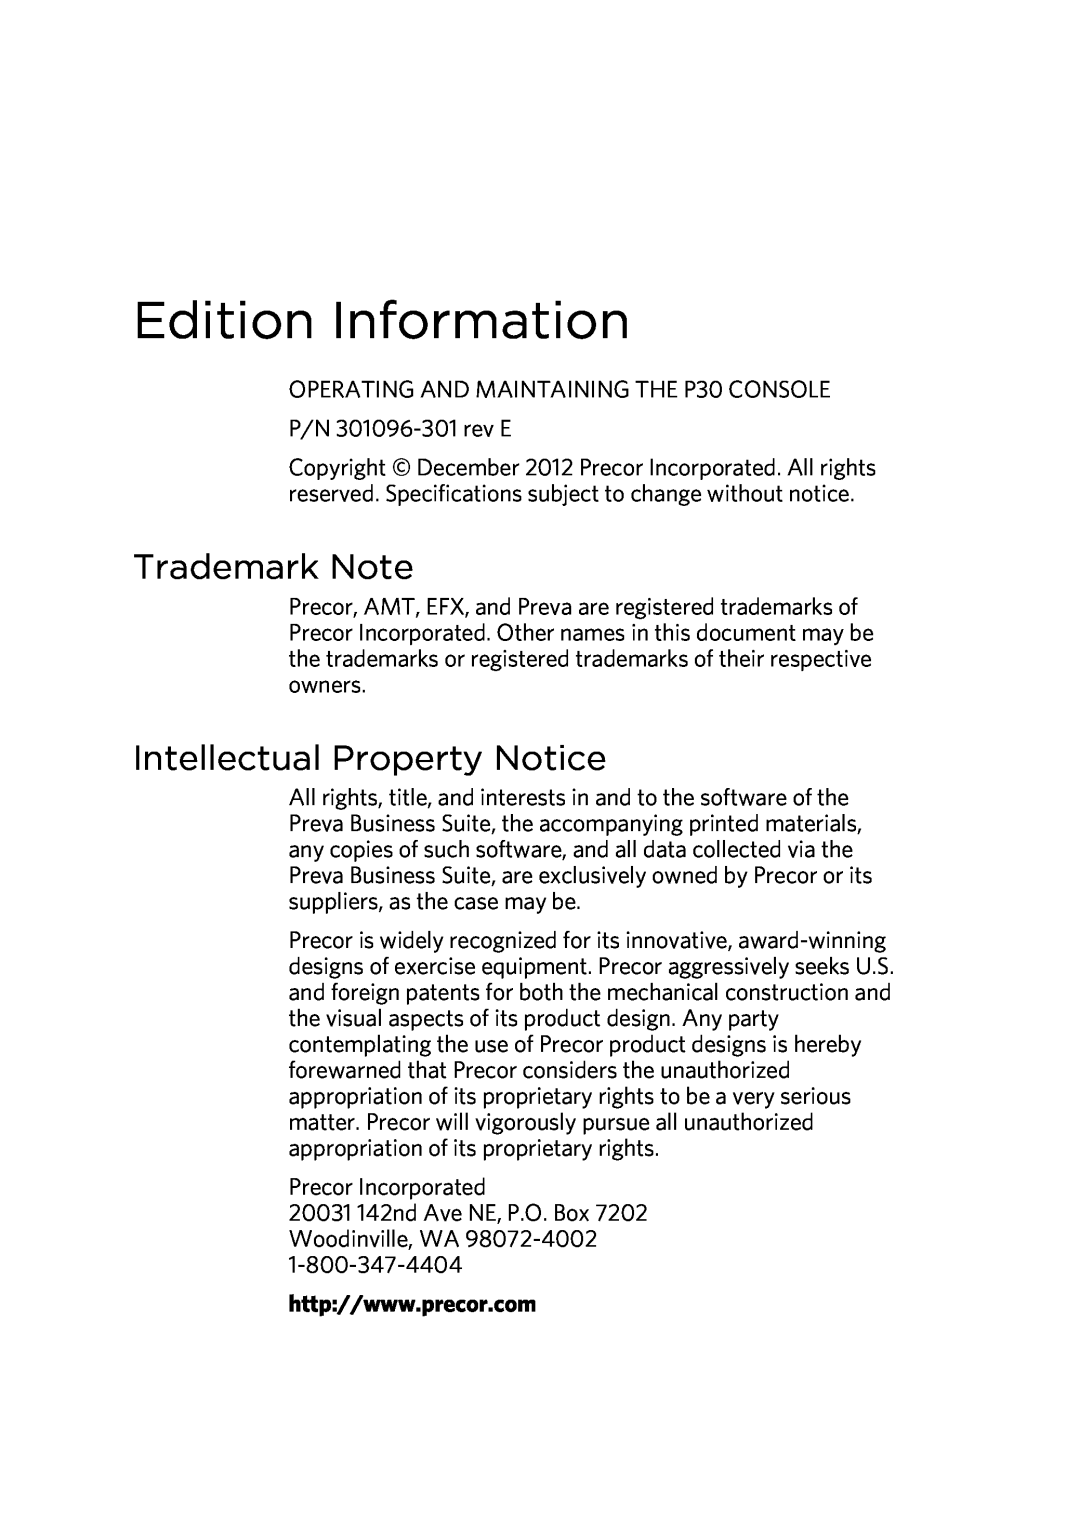 Precor P30 manual Edition Information, Trademark Note, Intellectual Property Notice 